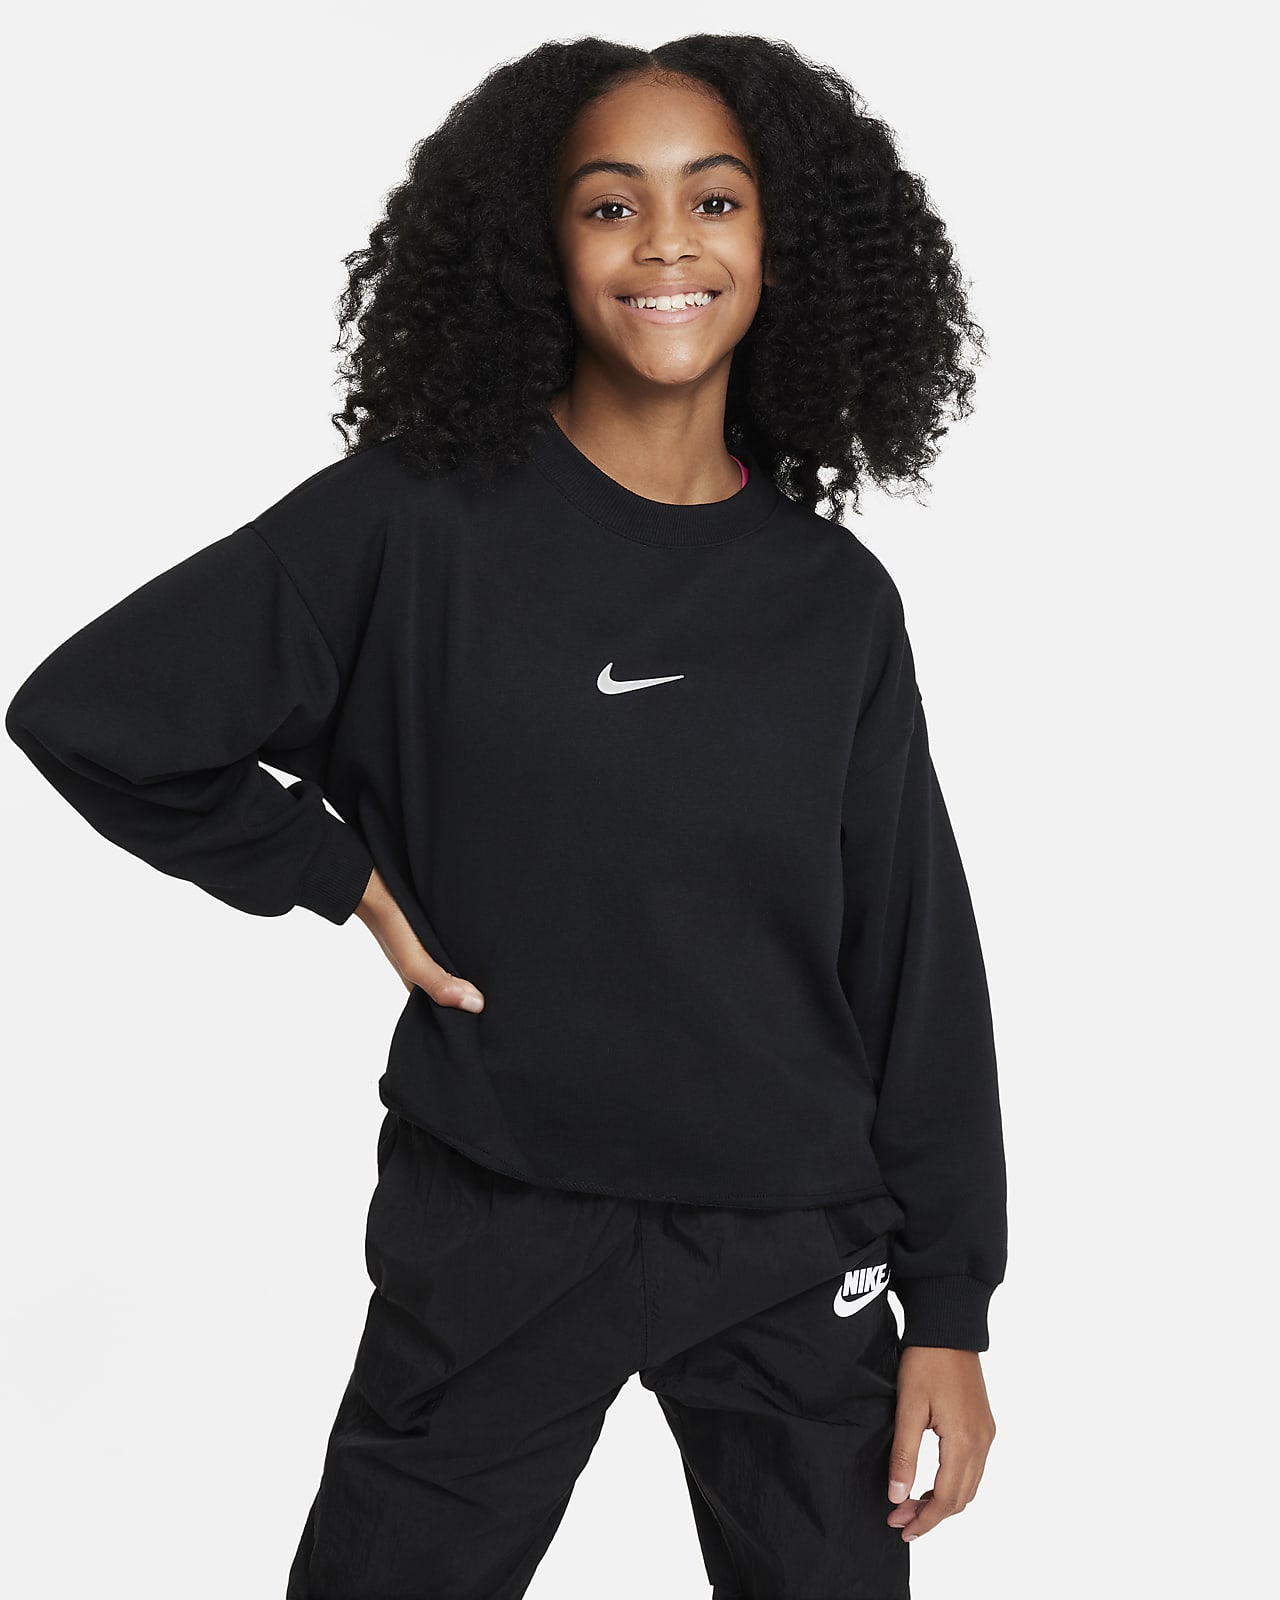 Nike Sportswear Dri-FIT sweatshirt met ronde hals voor meisjes